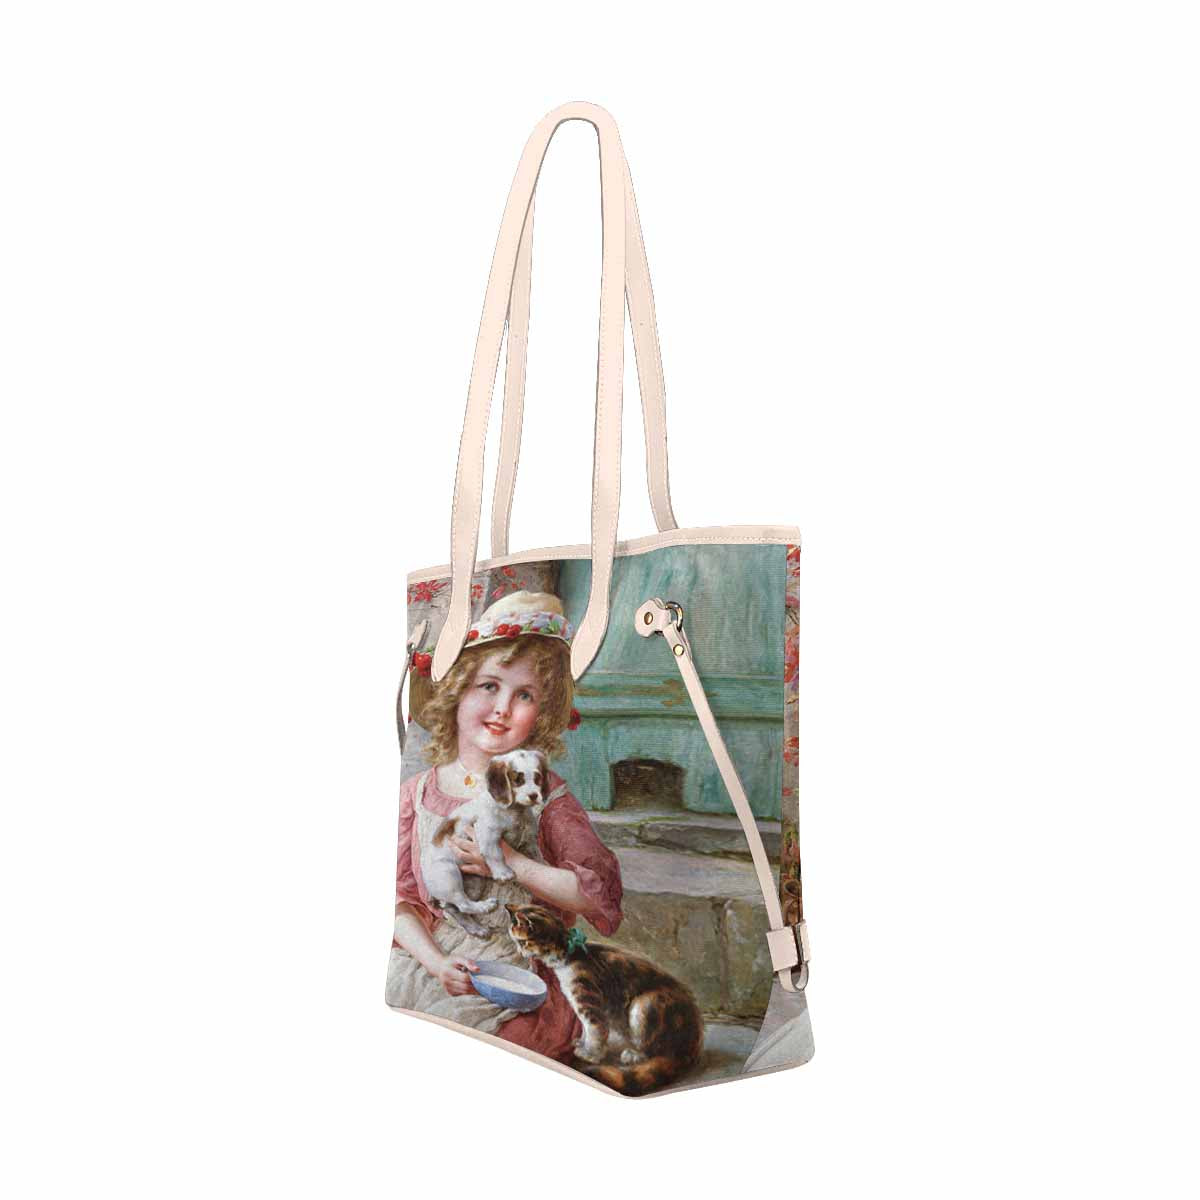 Victorian Girl Design Handbag, Model 1695361, New Friends, BEIGE/TAN TRIM